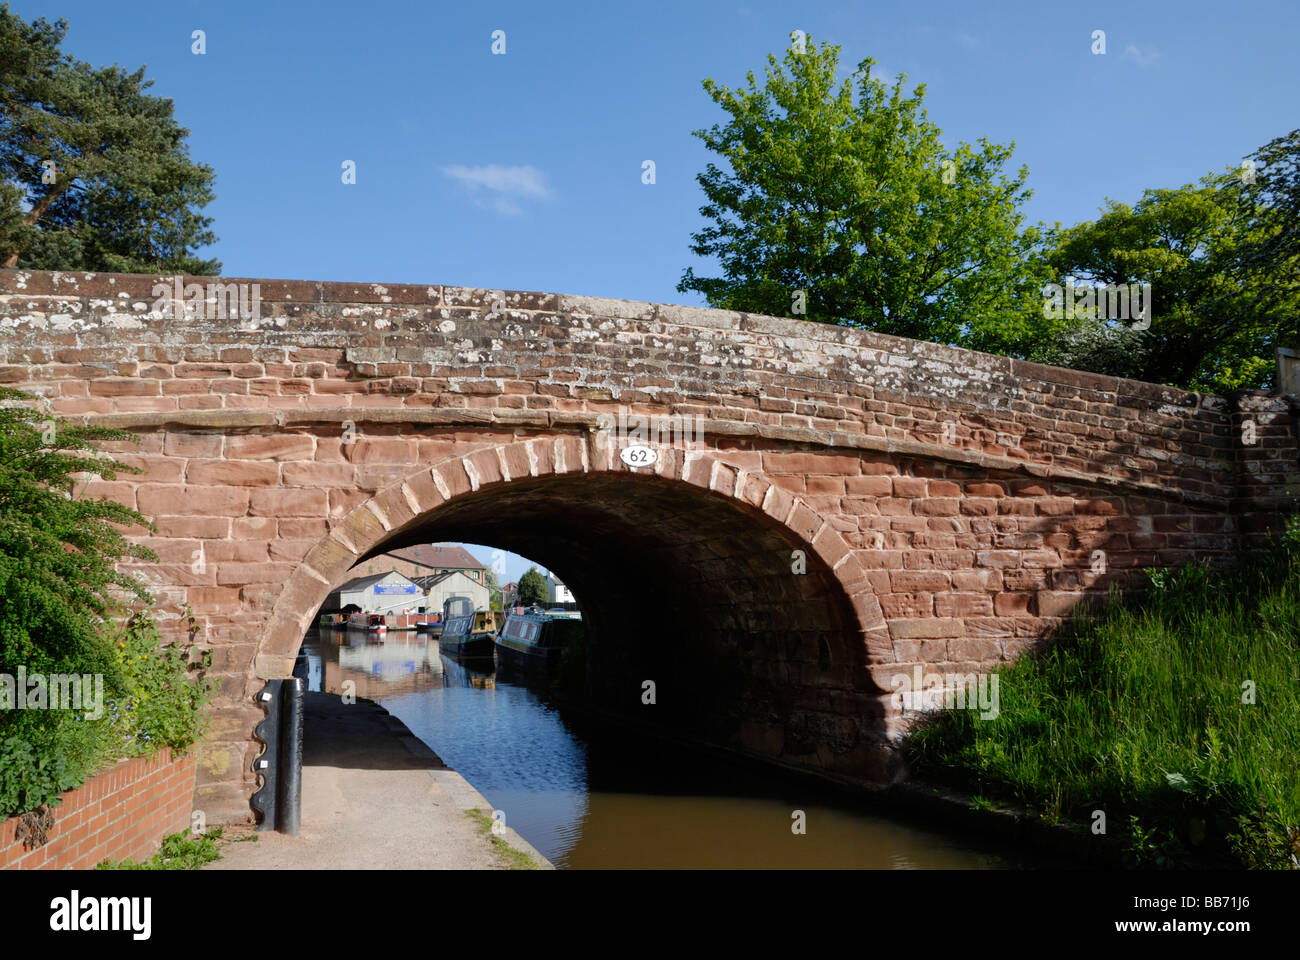 A bridge (No 62) over the Shropshire Union Canal at Market Drayton, Shropshire, England. Stock Photo